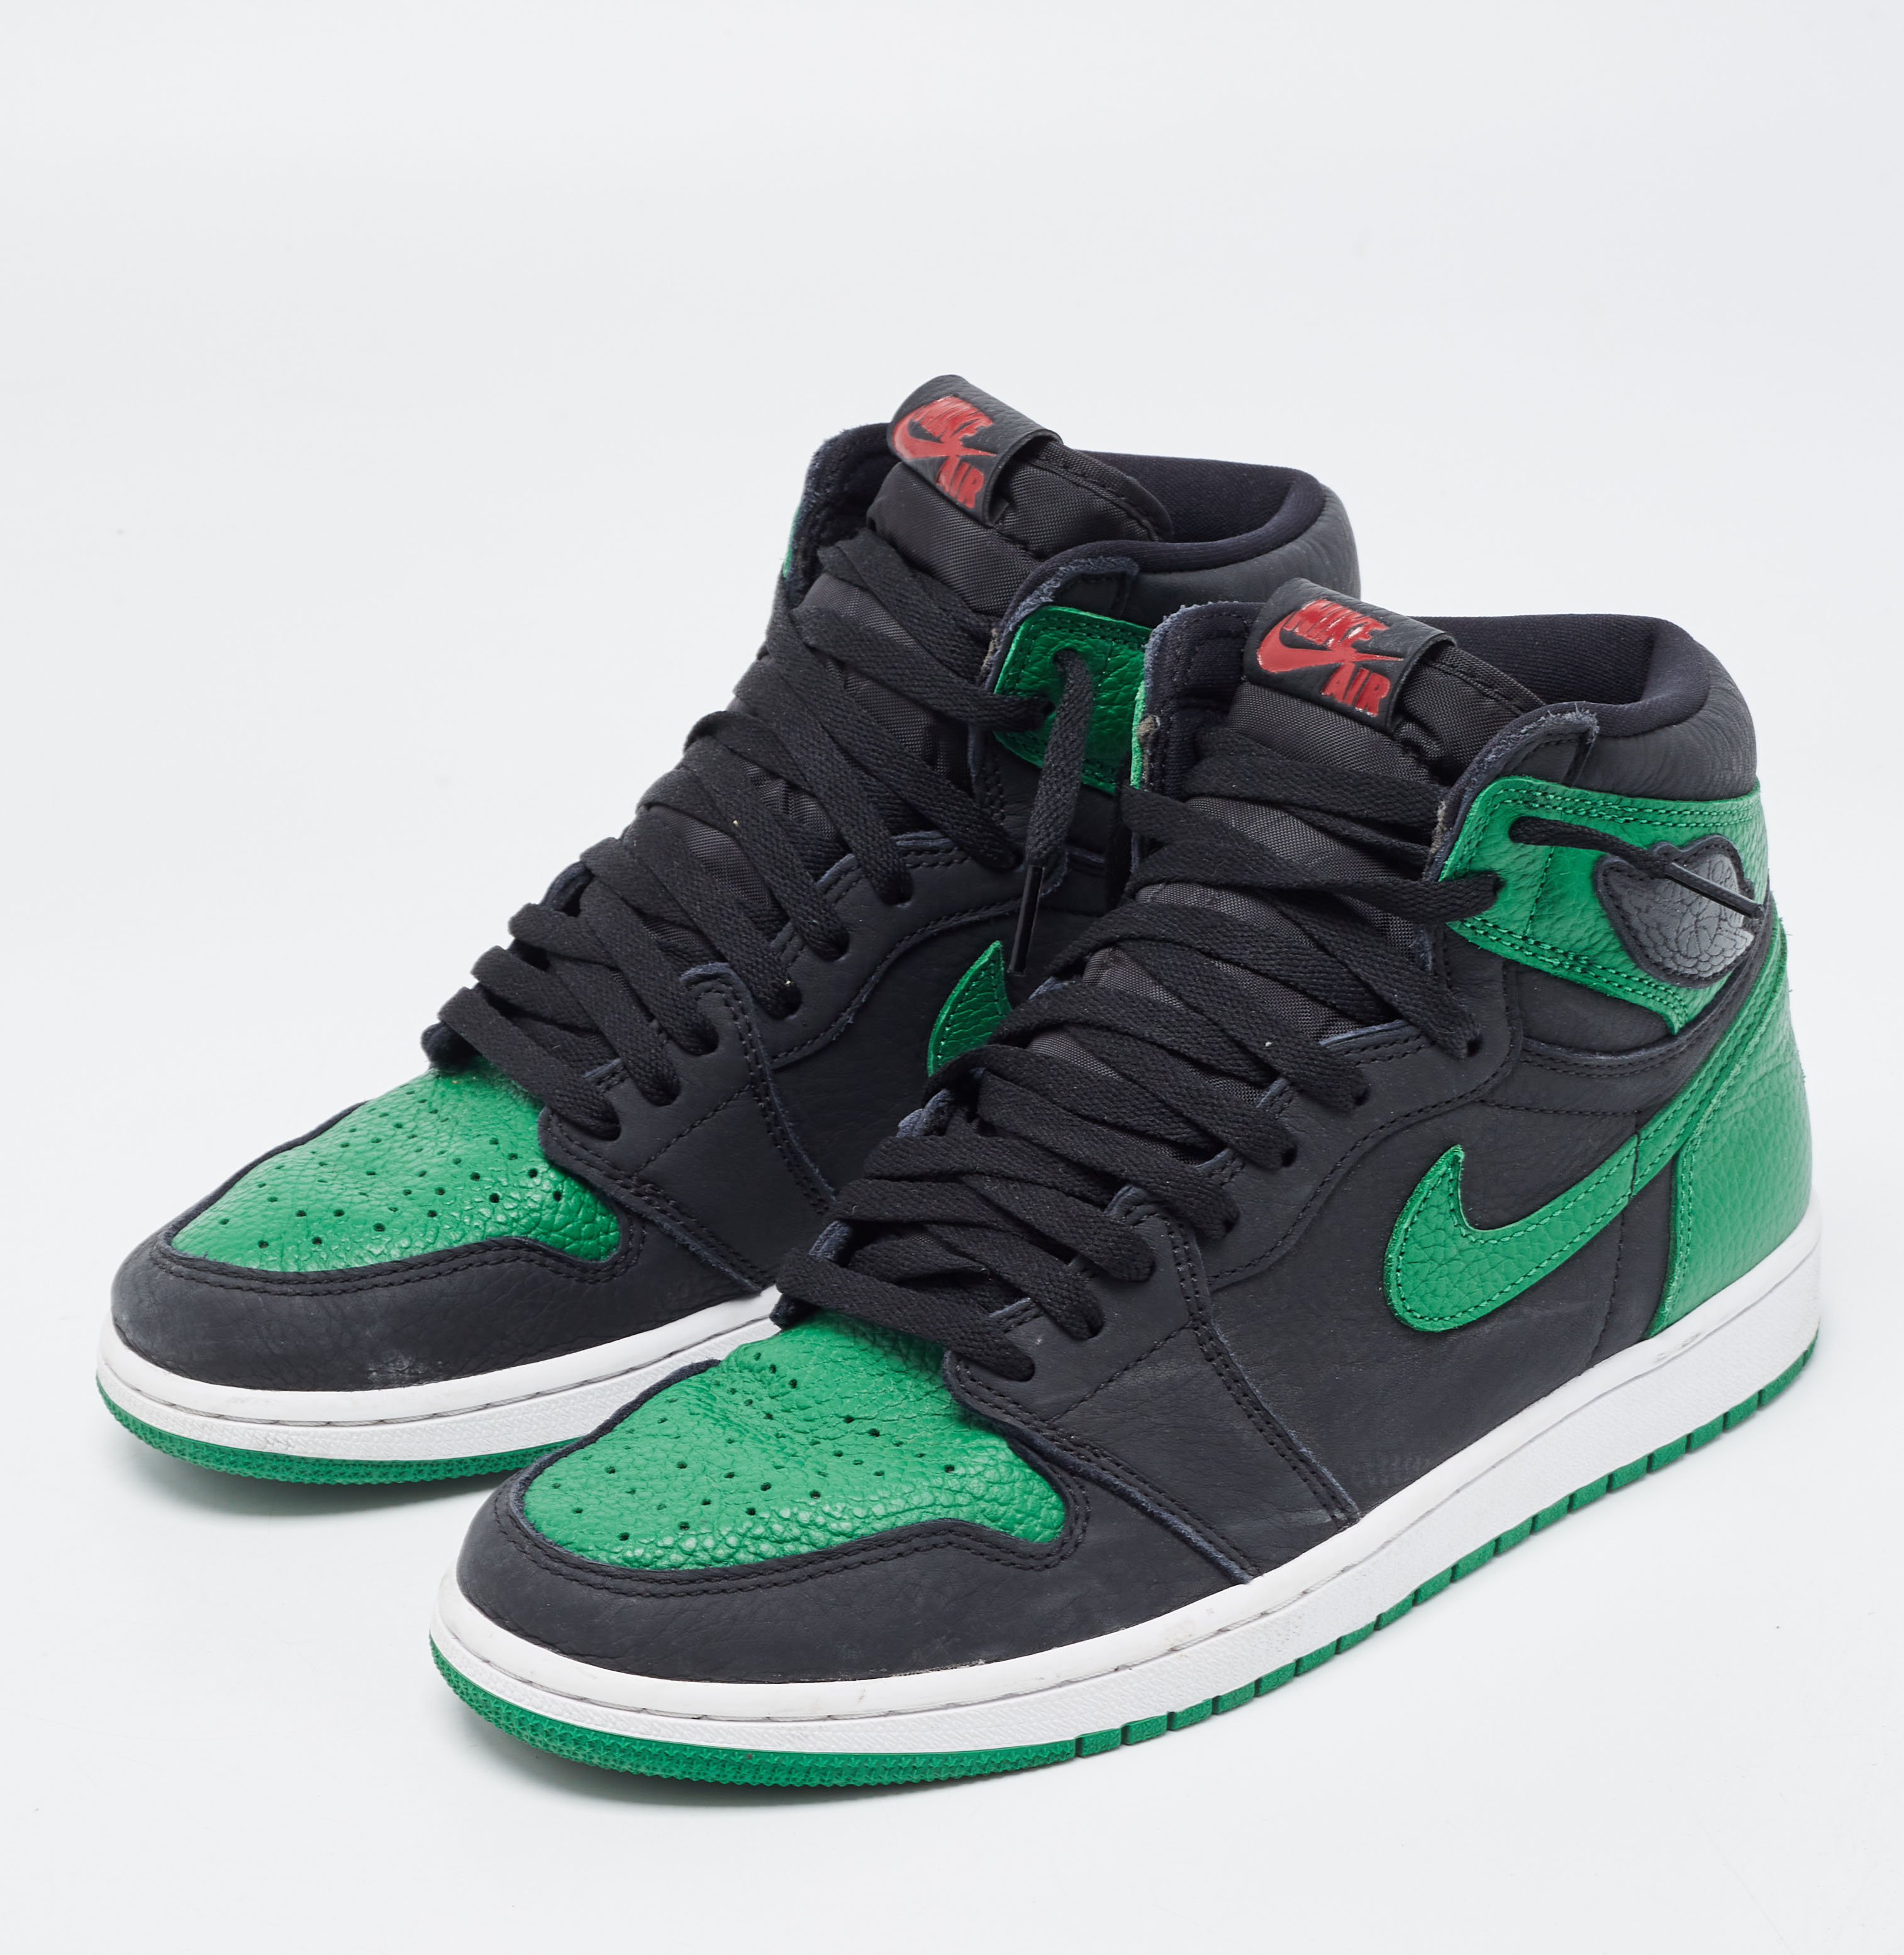 

Air Jordans Green Leather Jordan-1-Retro High-Pine-Green-Black Sneakers Size